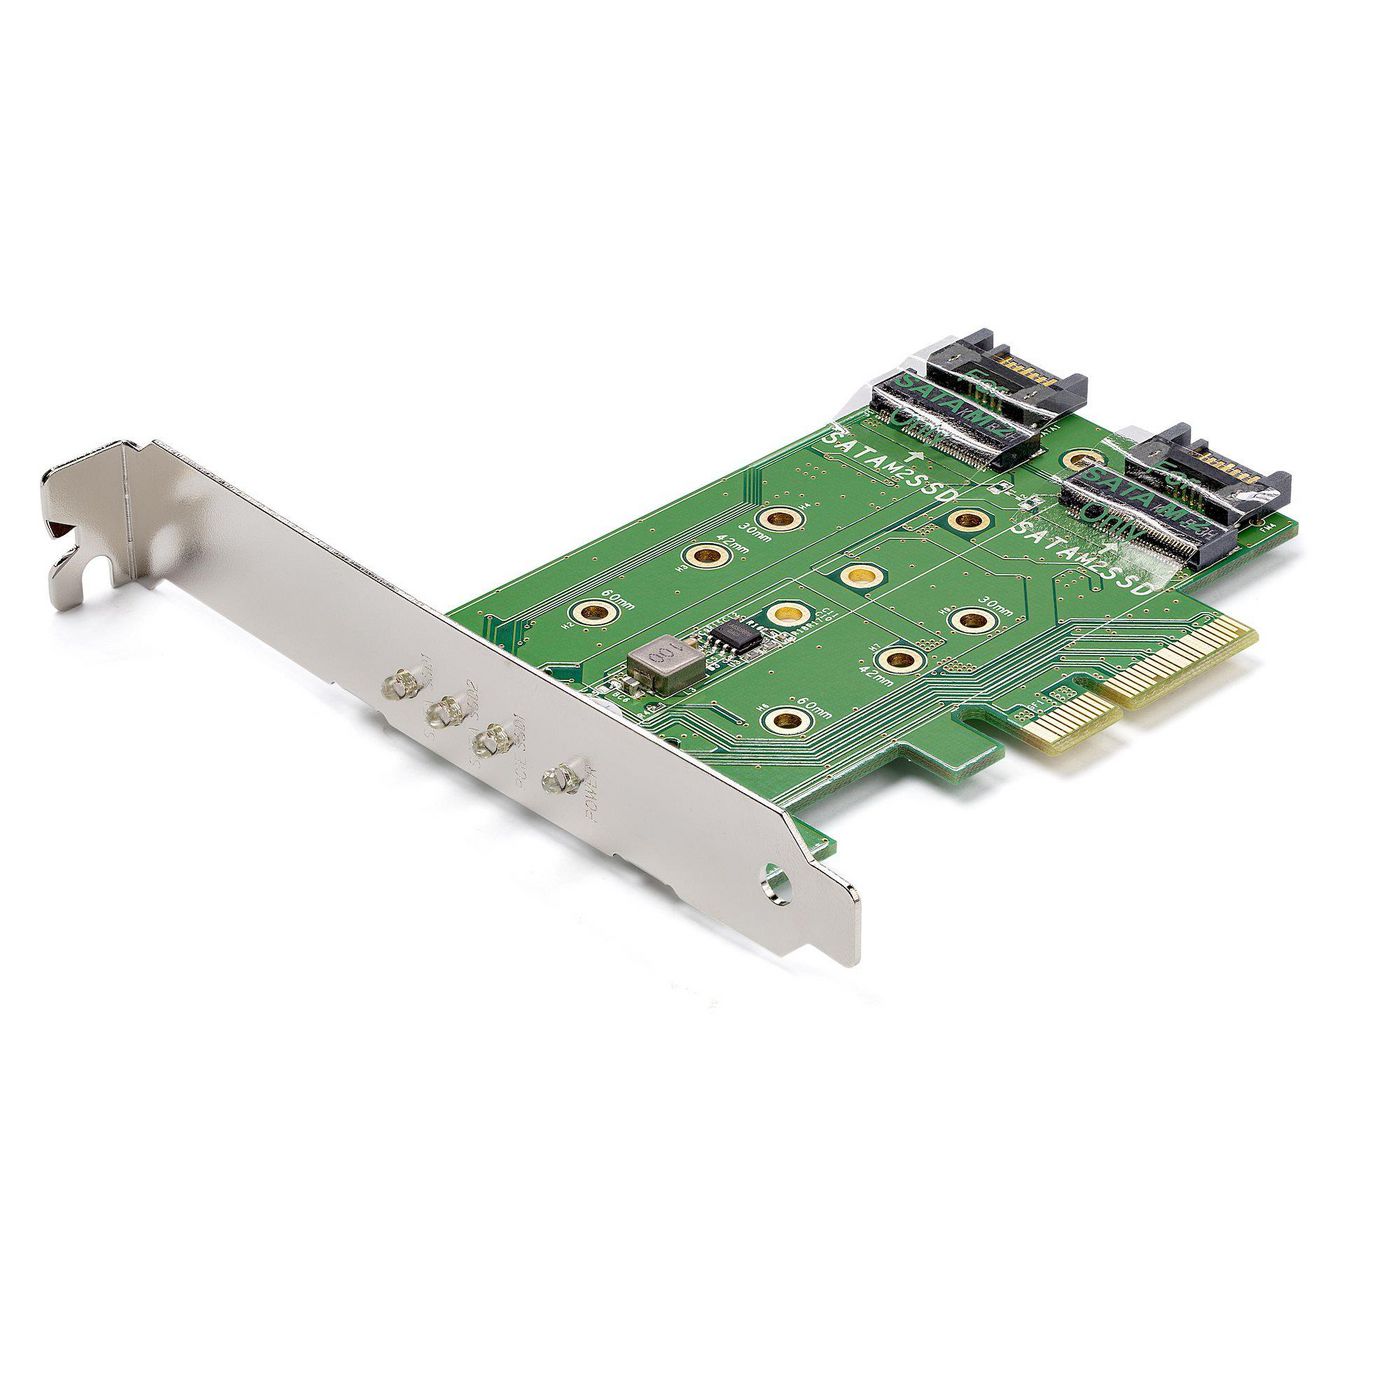 STARTECH.COM 3 Port M.2 SSD (NGFF) Adapterkarte - 1x PCIe (NVMe) M.2, 2x SATA III M.2 - PCIe 3.0 - P